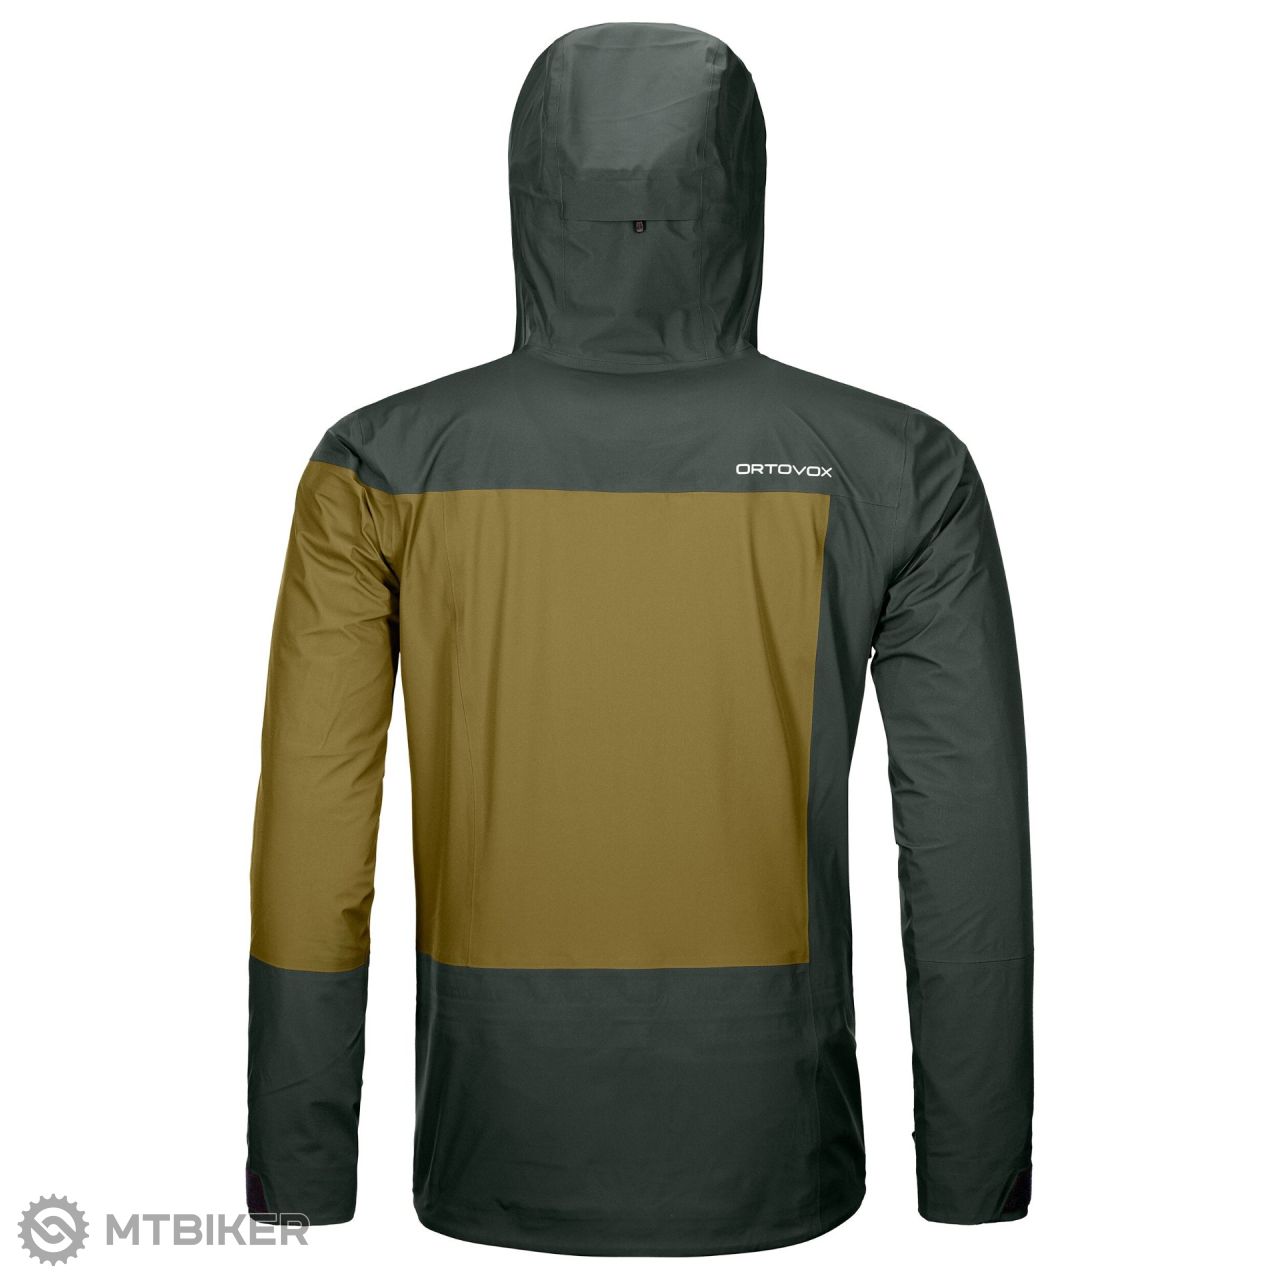 ORTOVOX 3L Deep Shell jacket, green/pine - MTBIKER.shop